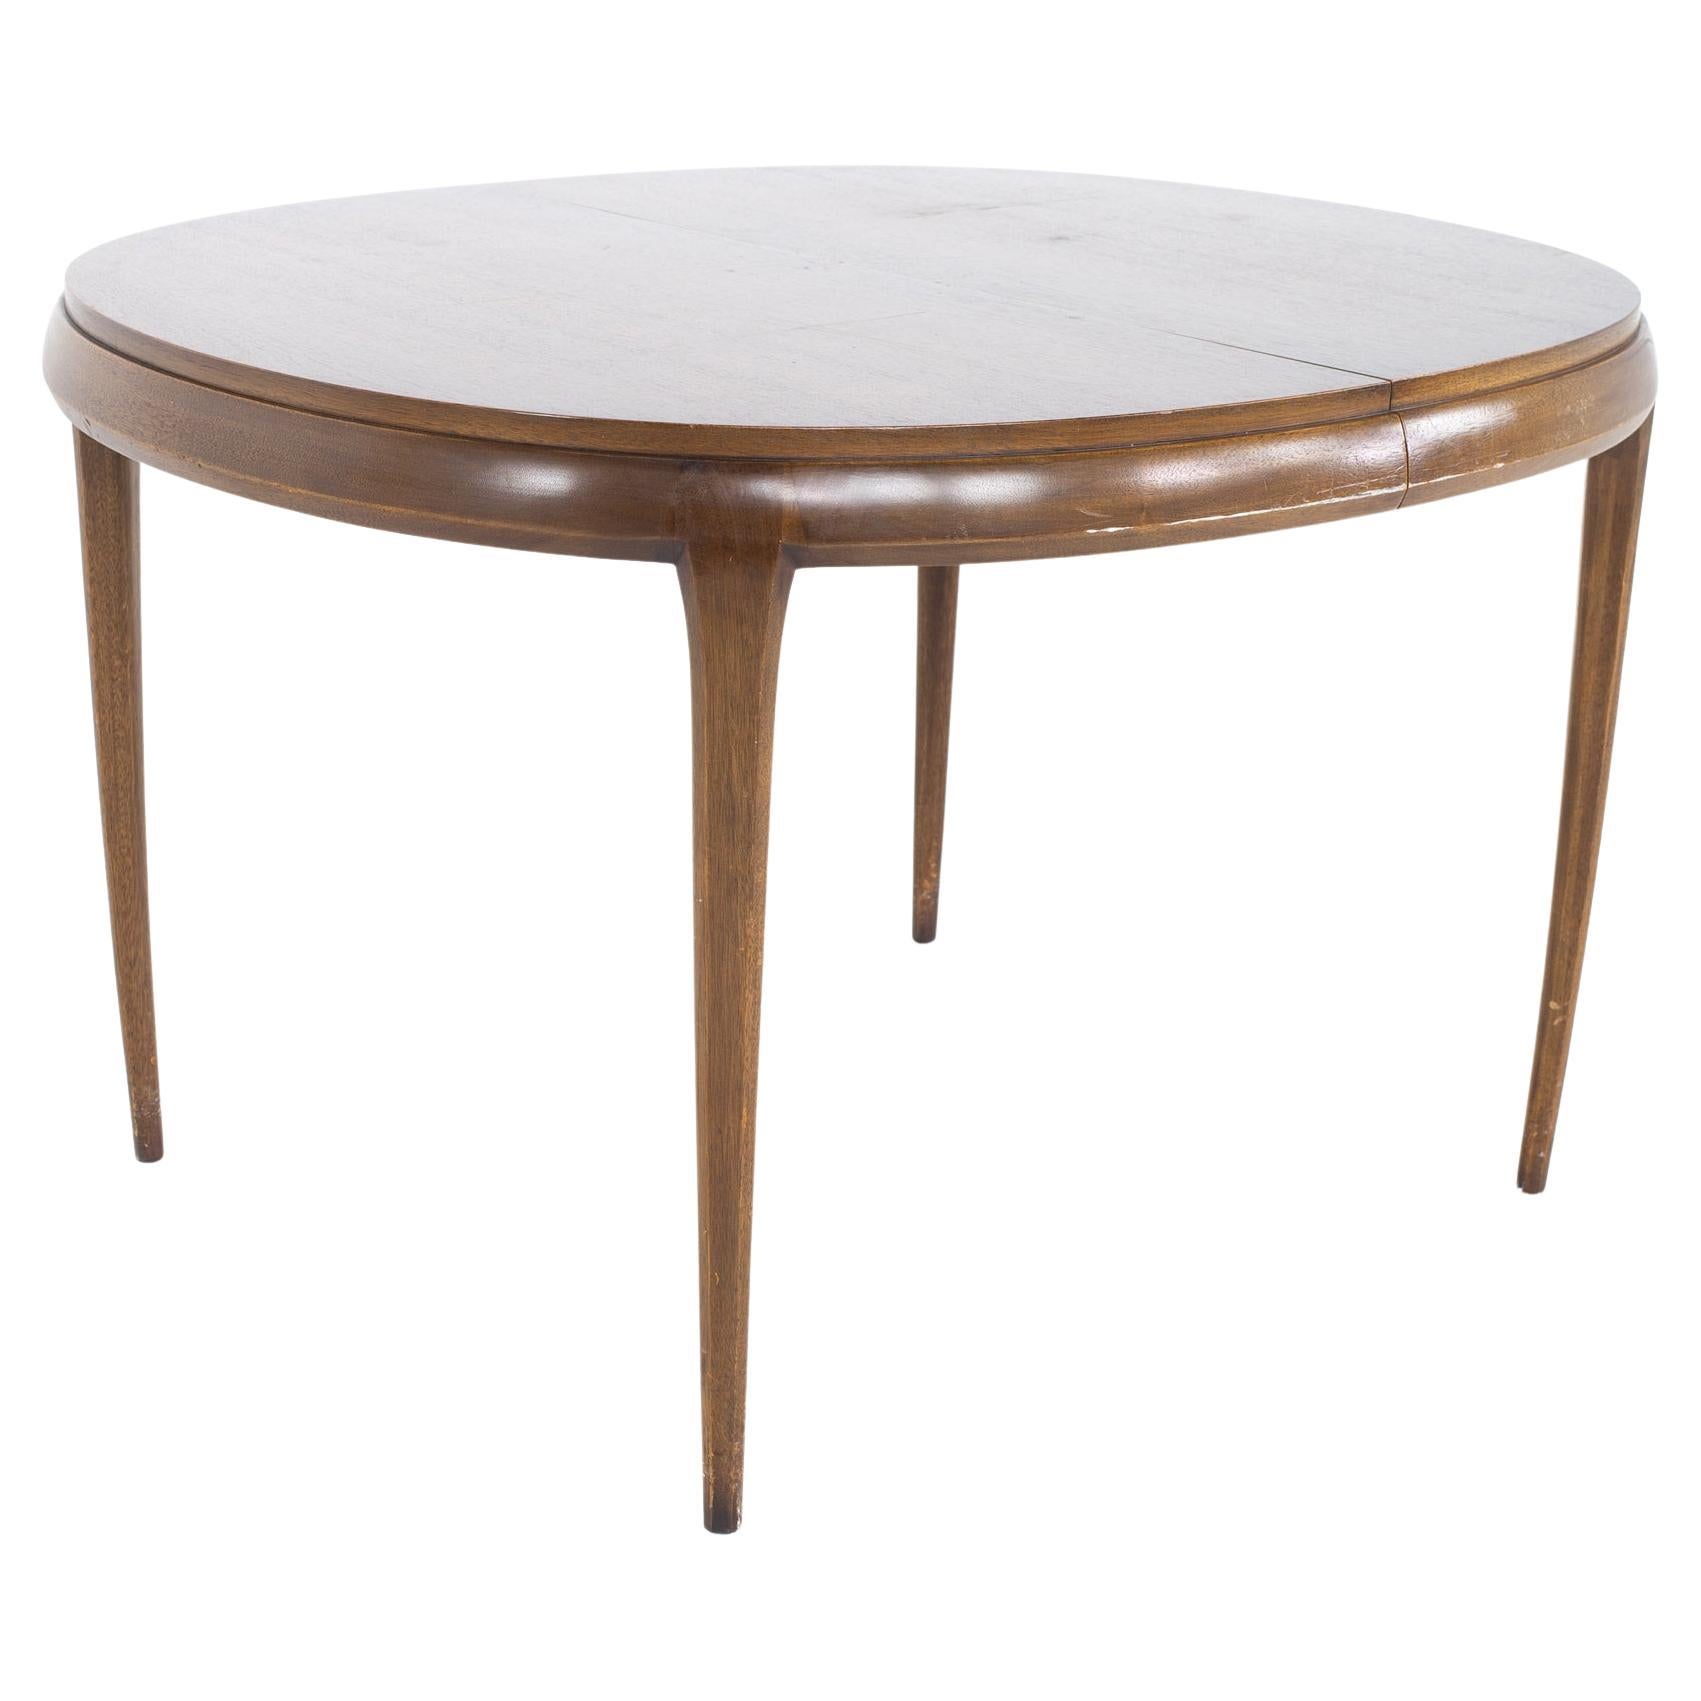 Restored Lane Rhythm Style Mid Century Walnut Round Oval Expanding Dining Table